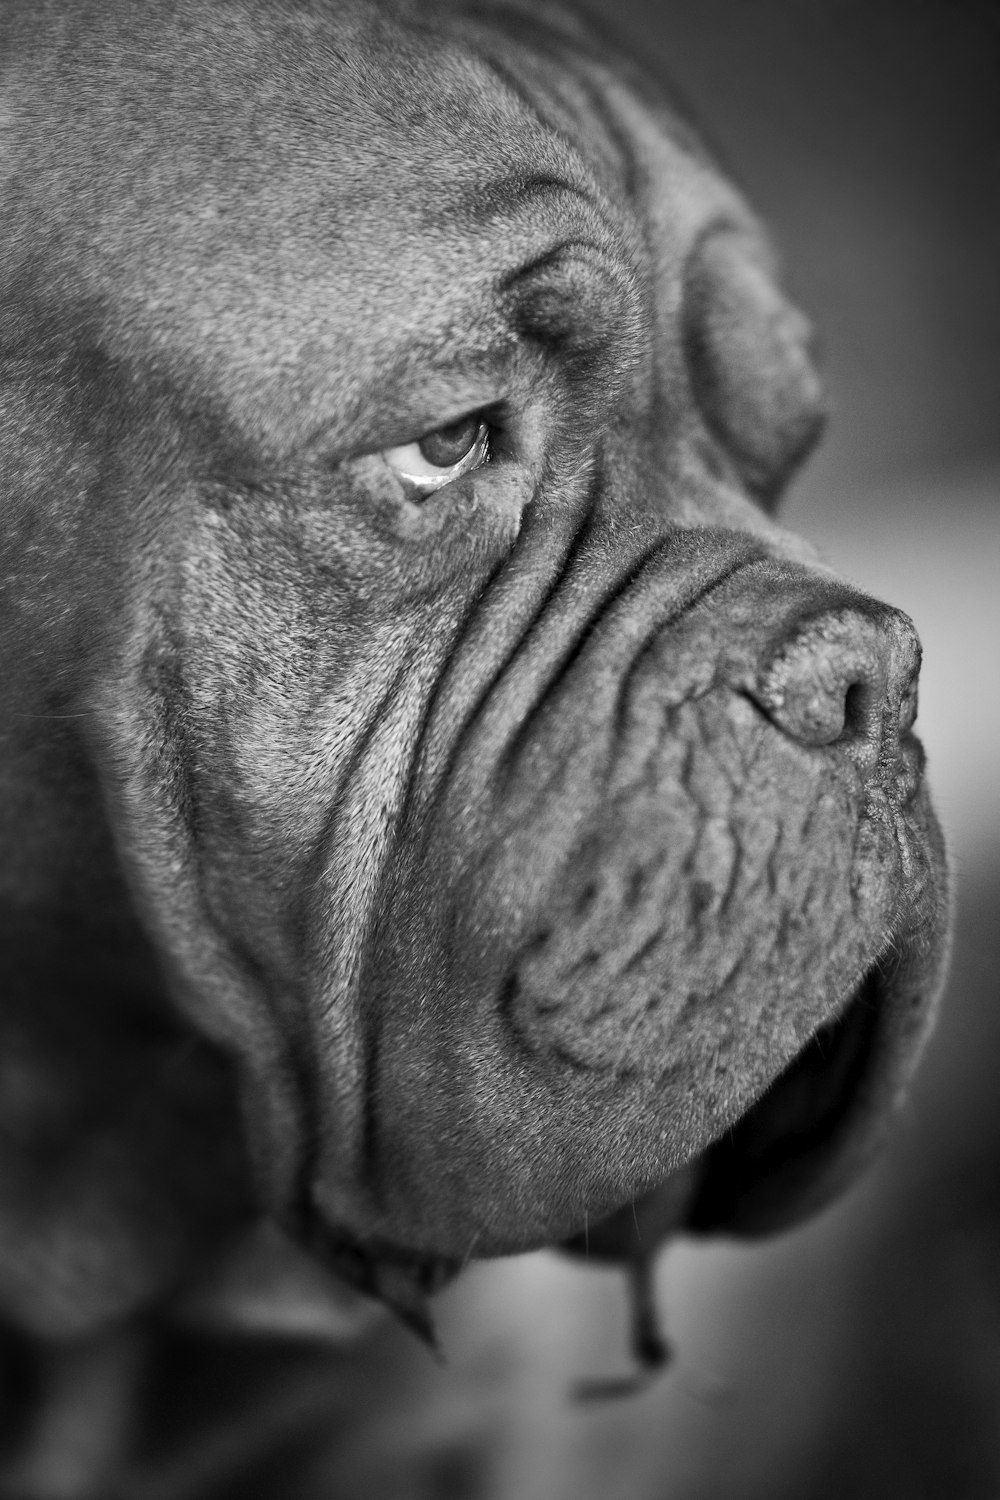 grayscale photo of short coated dog